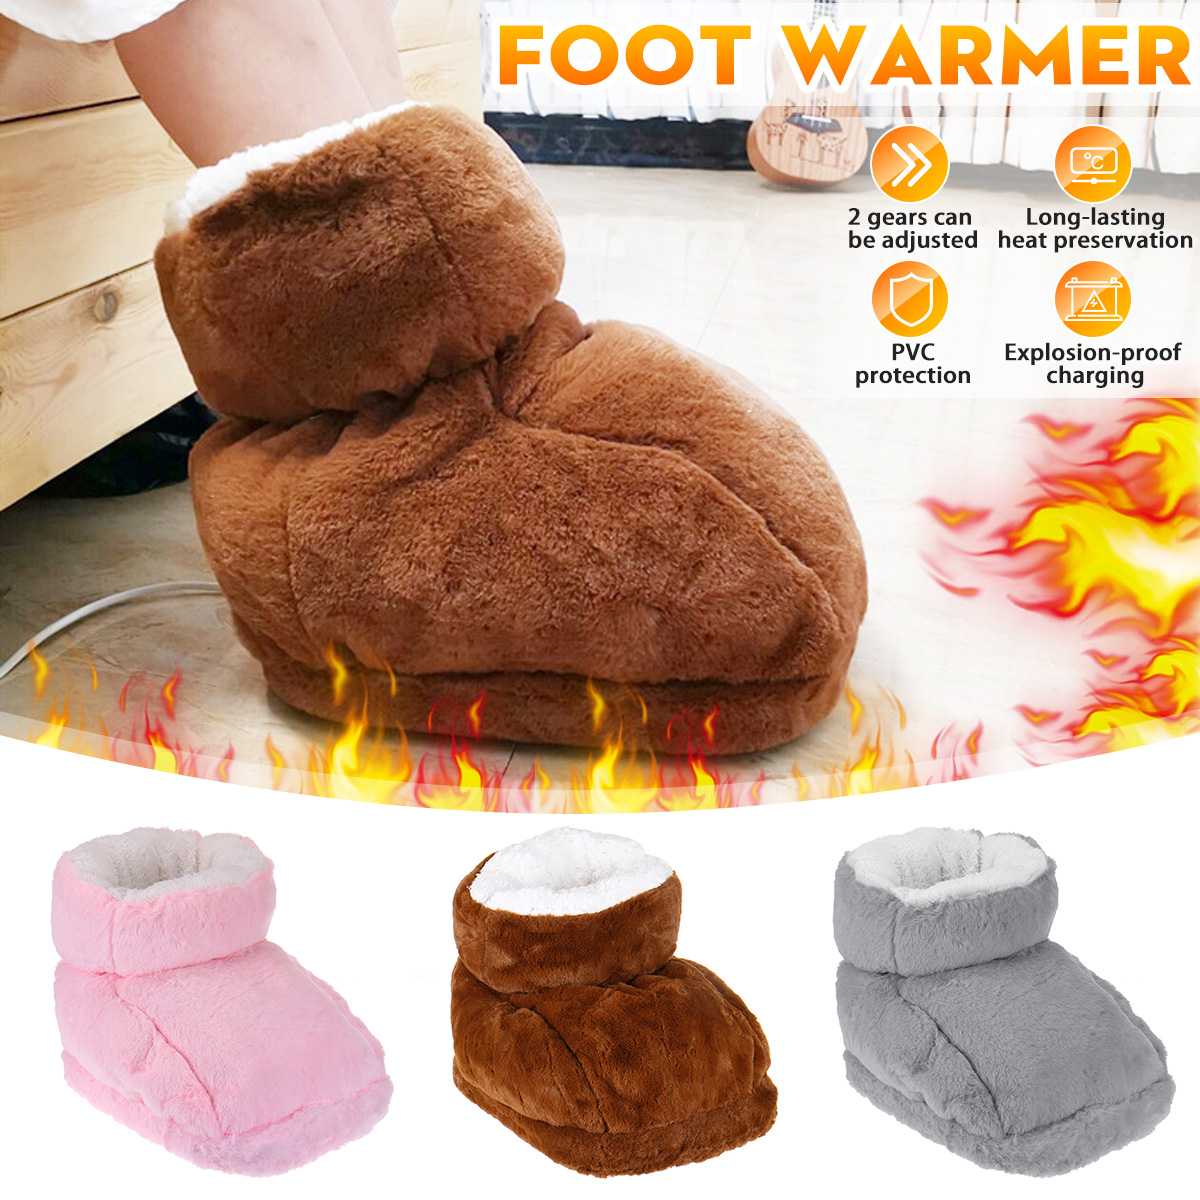 2-Model-Heating-Adjustable-Electric-Foot-Warmer-Heater-Power-Saving-Safe-Start-Warm-Foot-Cover-Feet--1757444-1